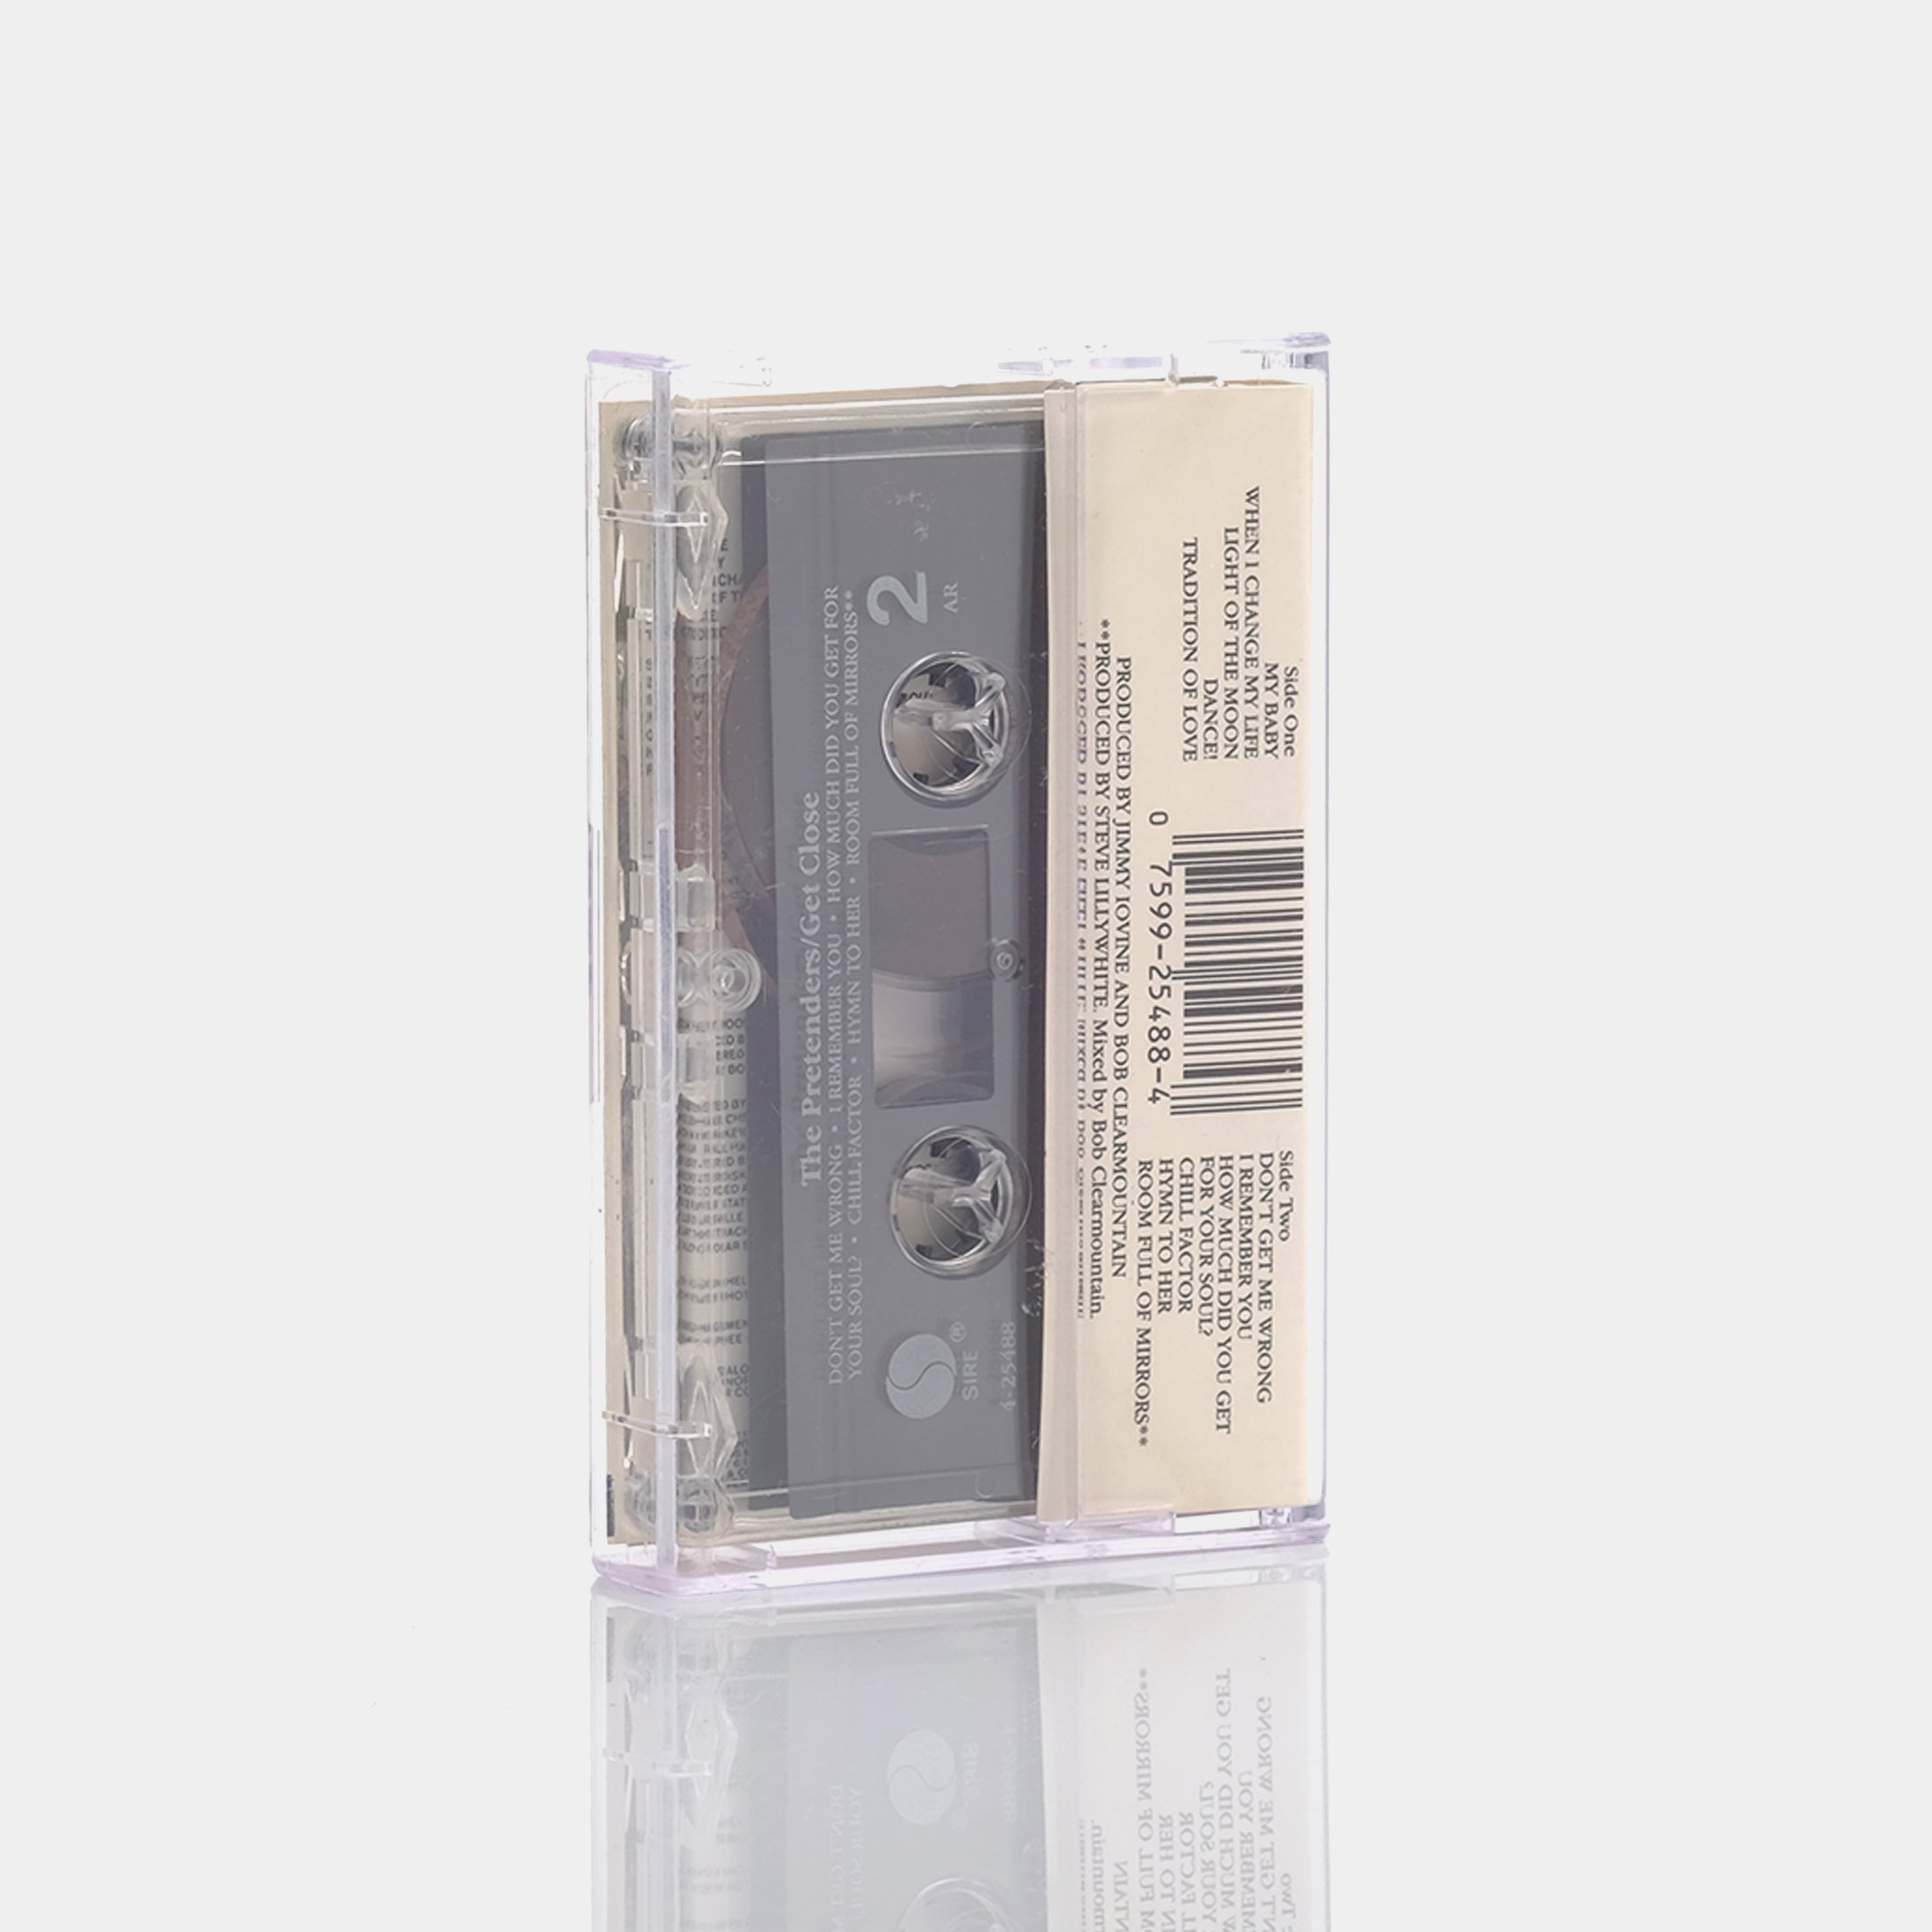 The Pretenders - Get Close Cassette Tape